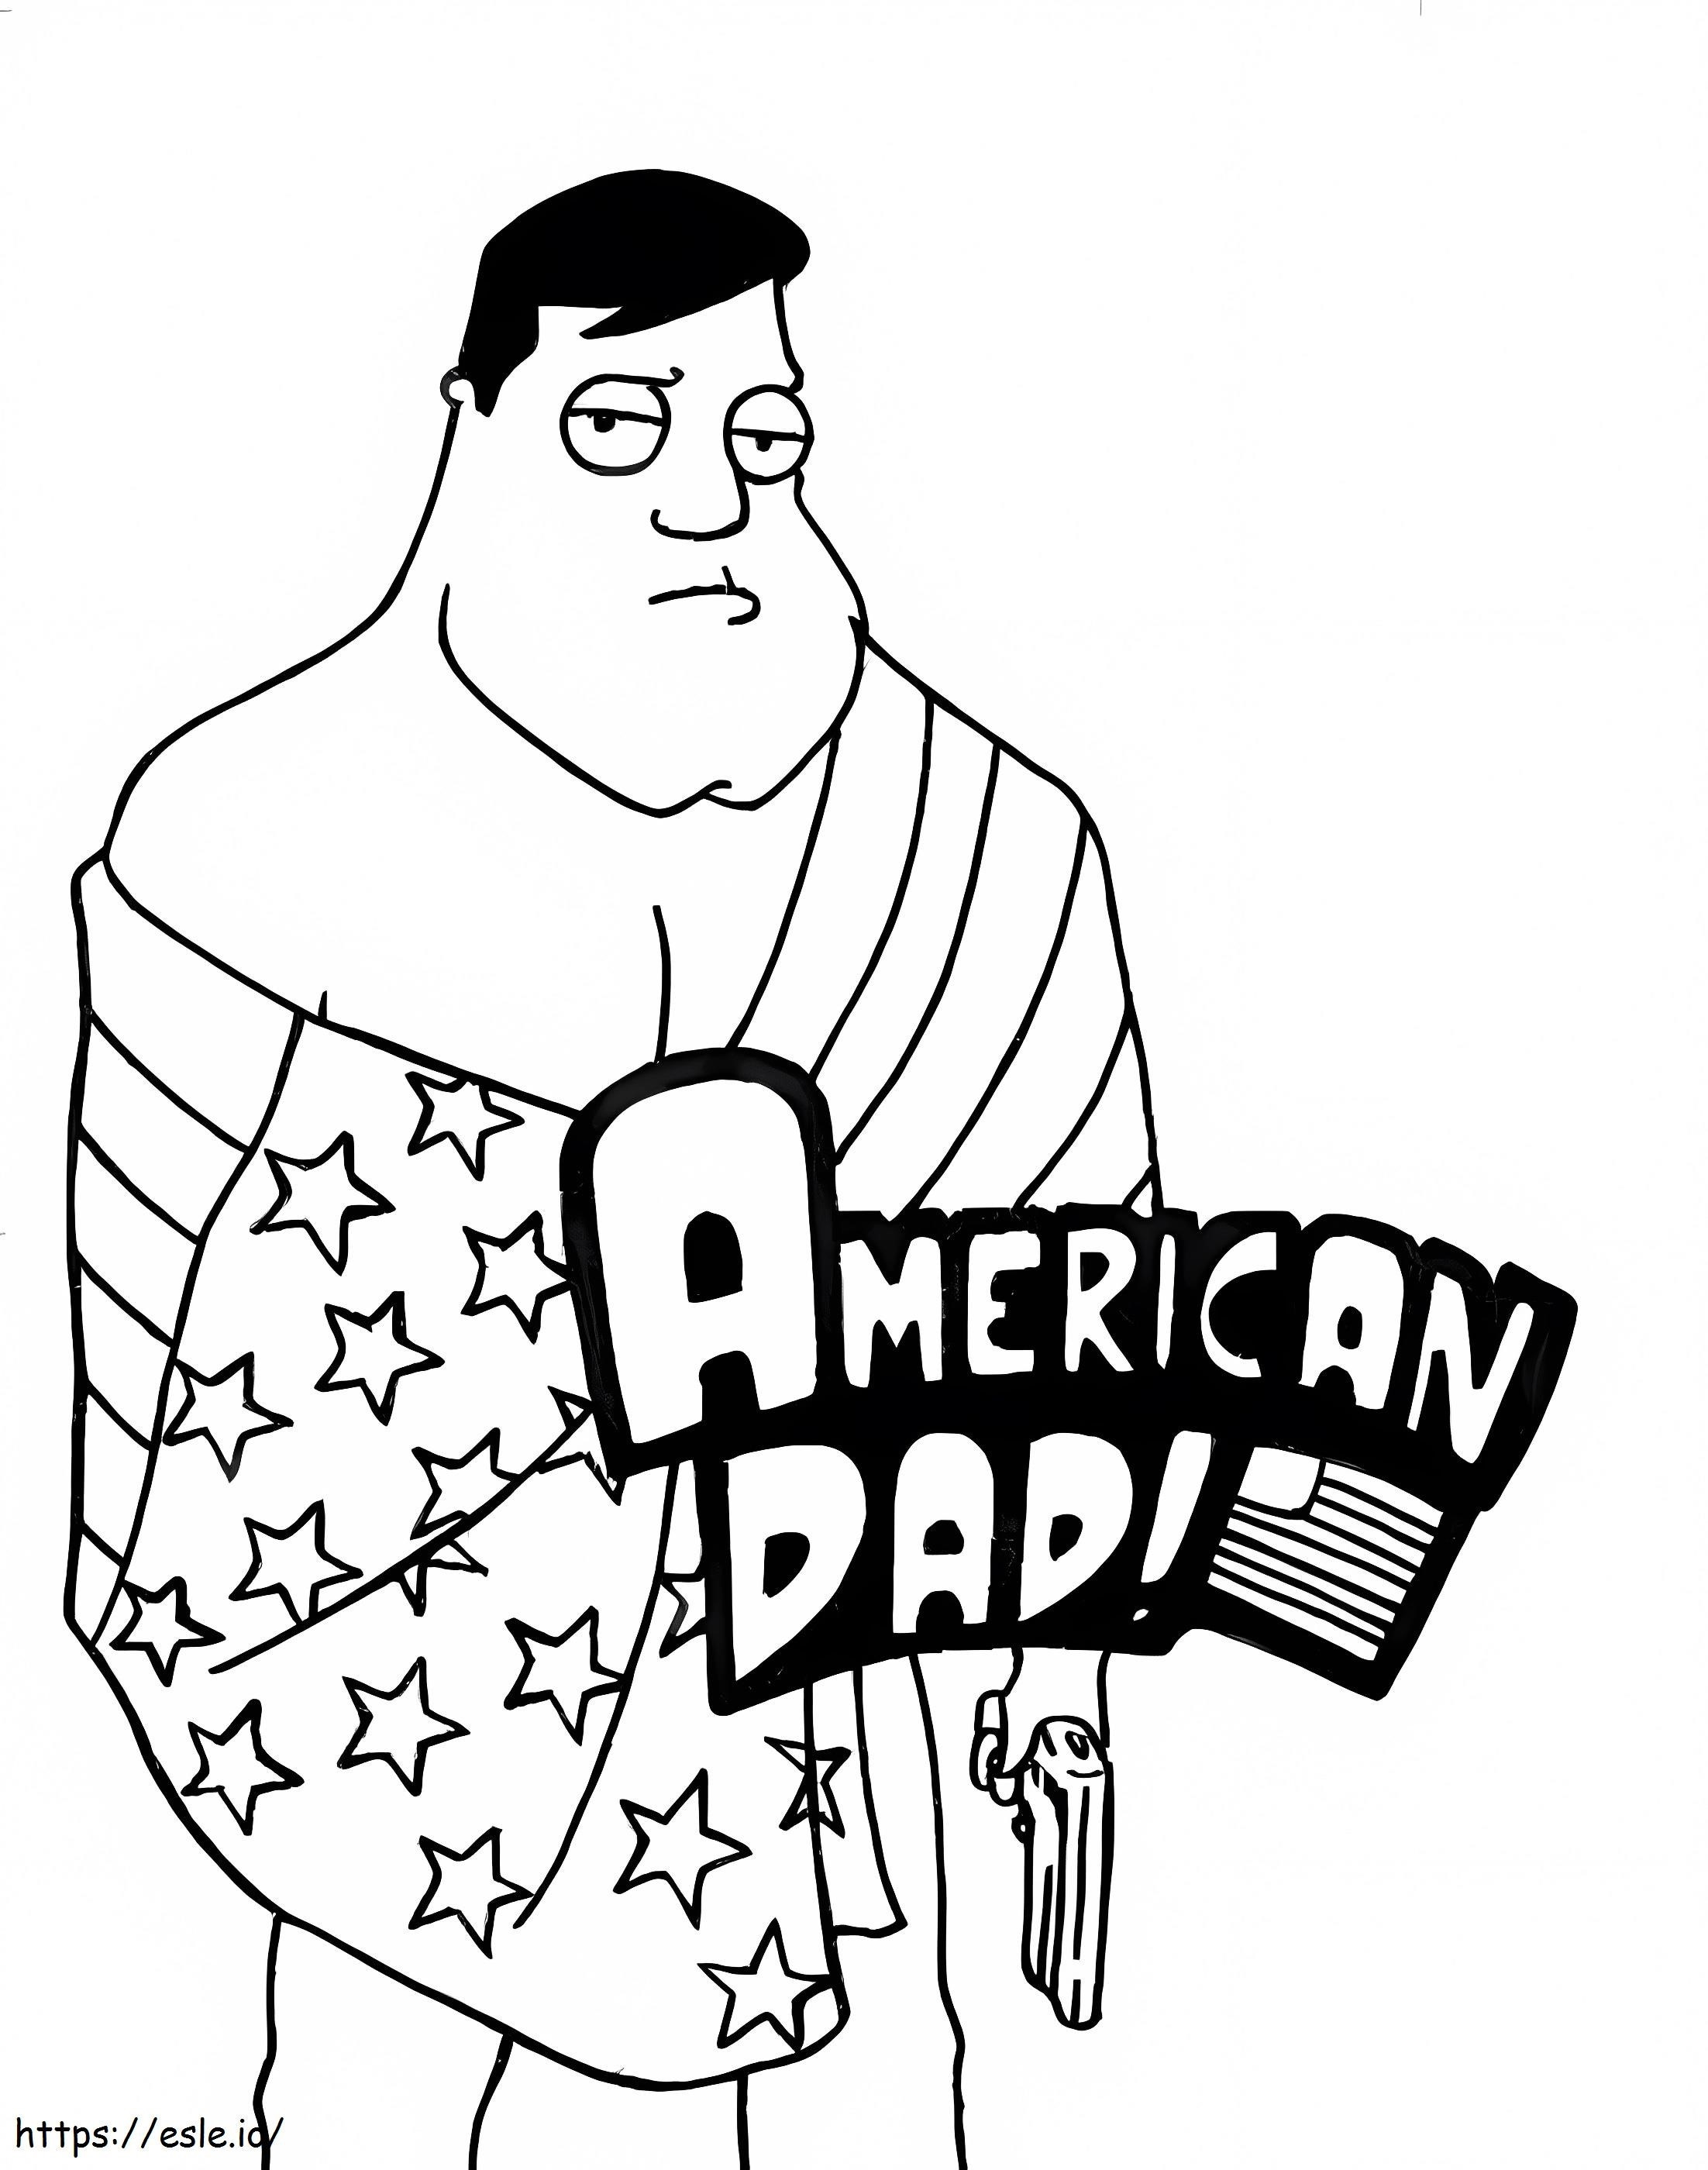 Printable American Dad coloring page